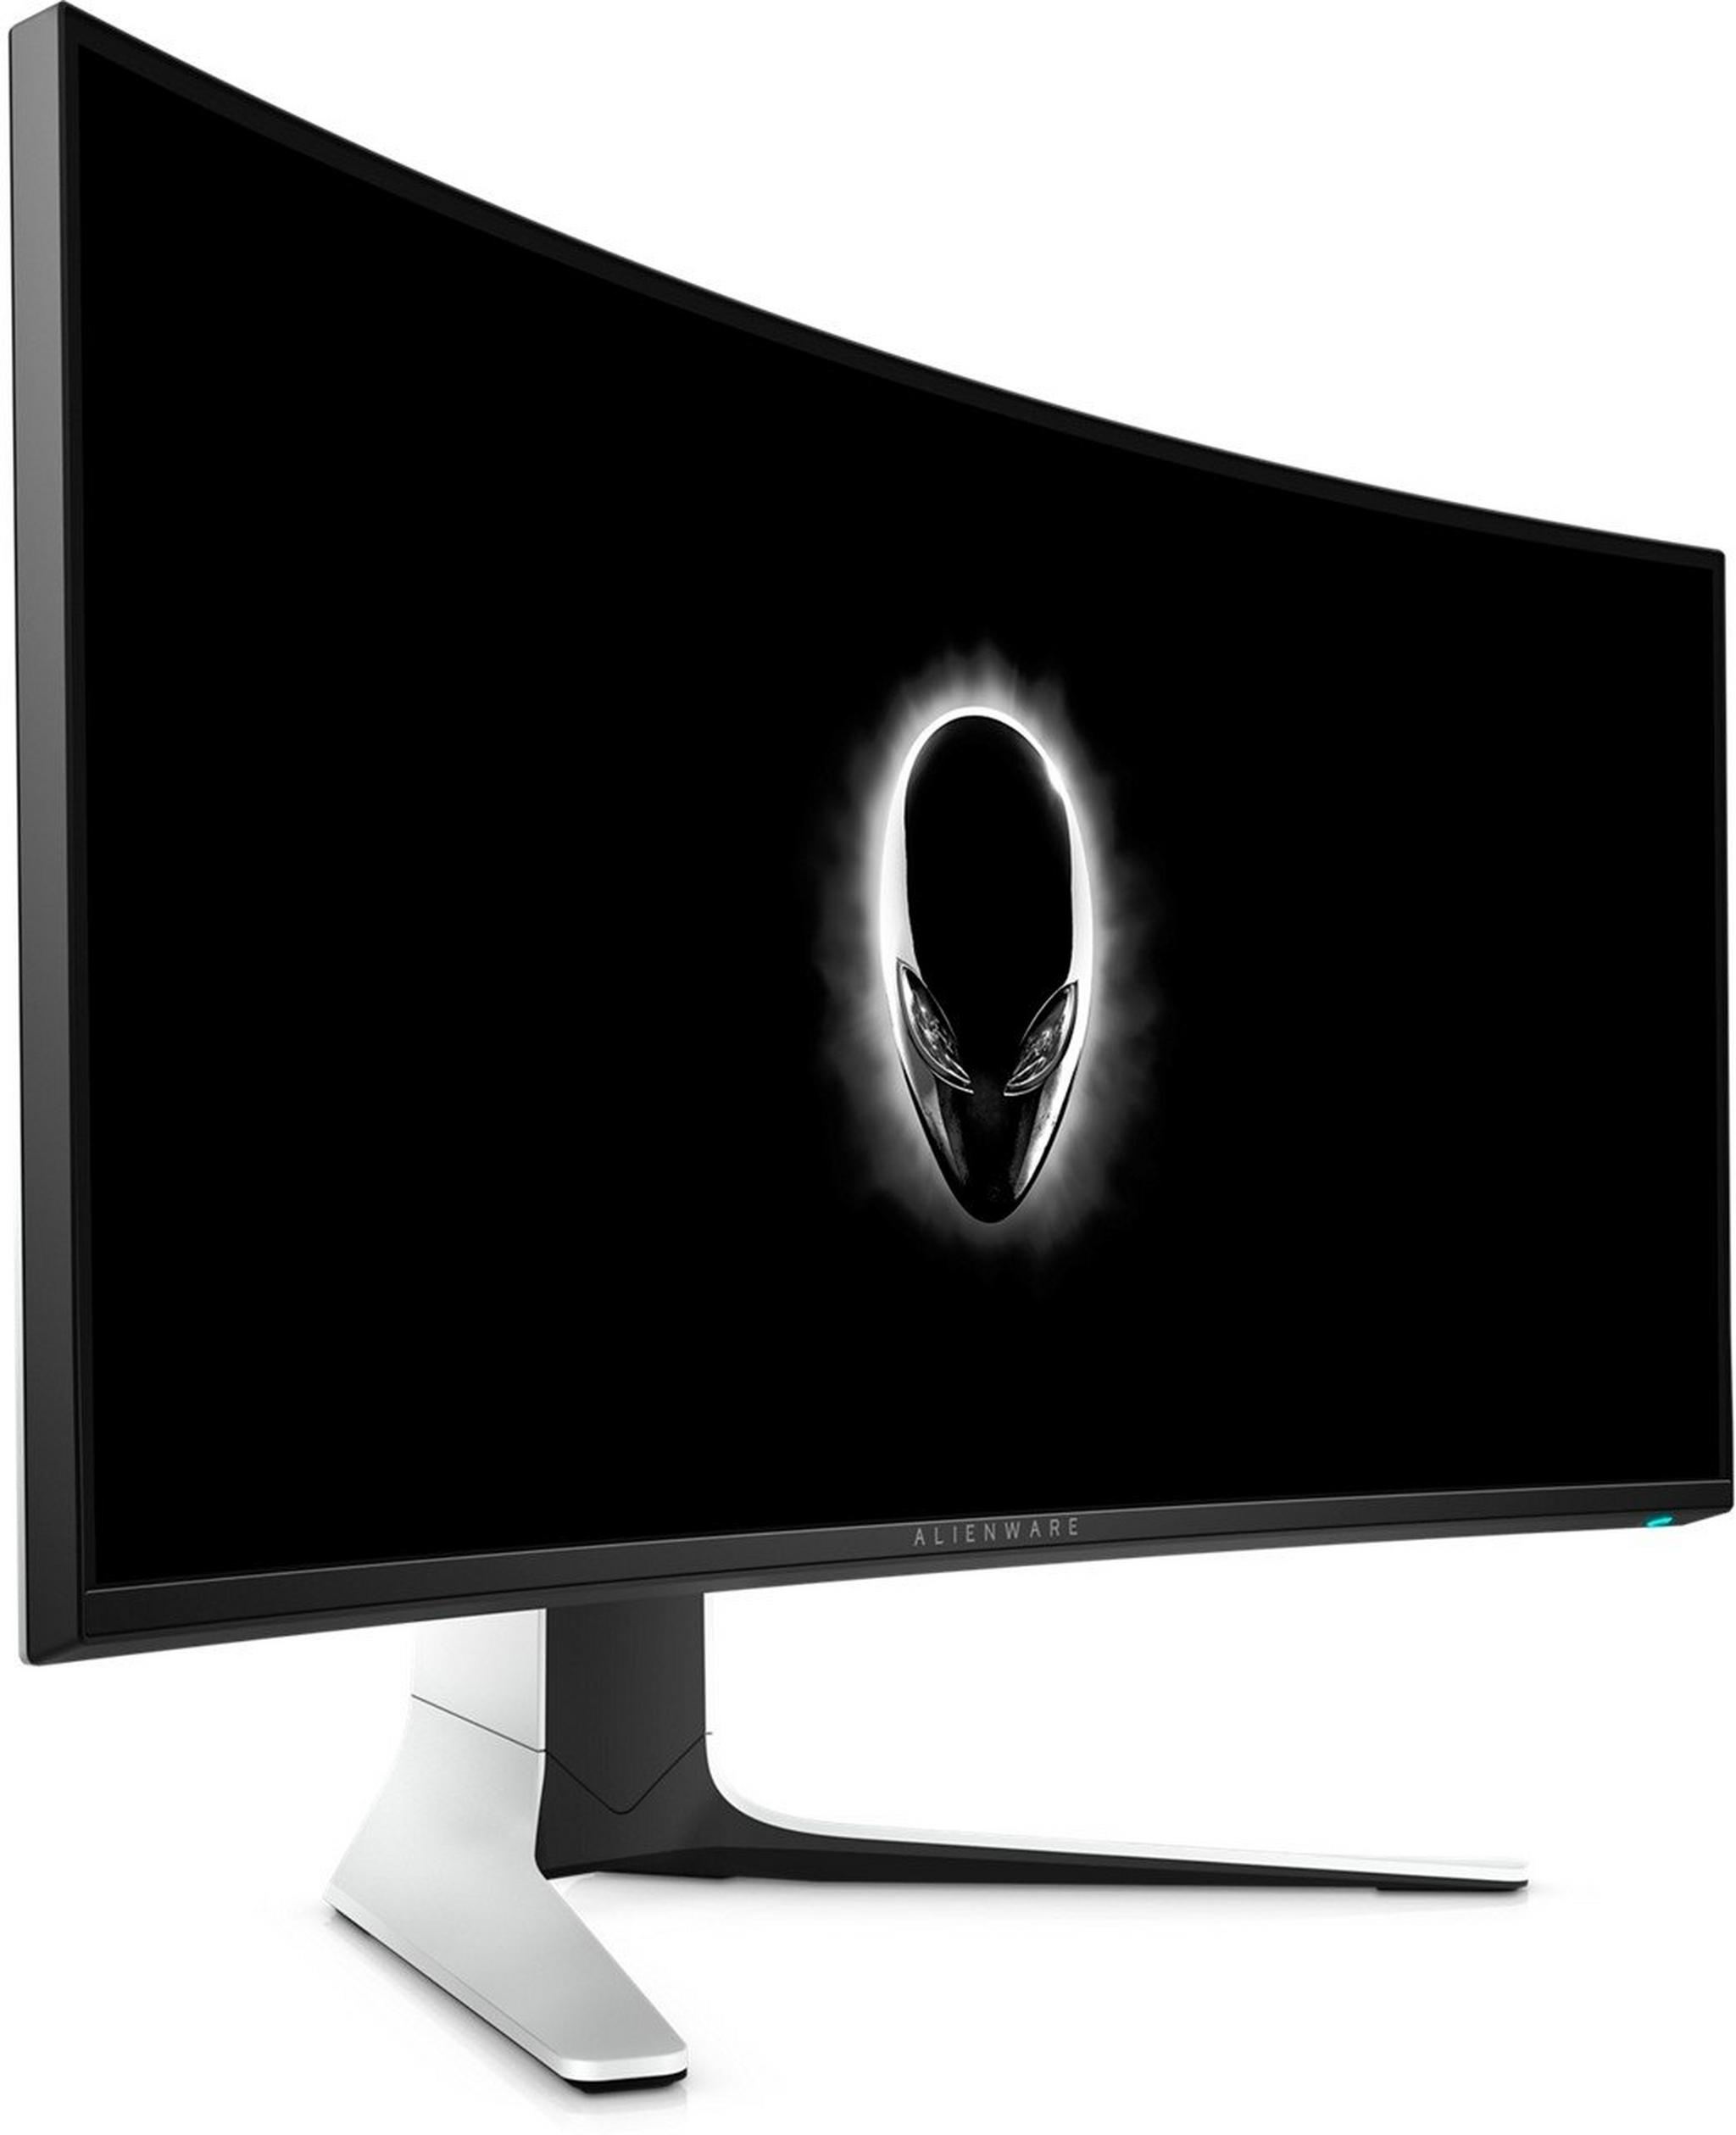 Dell Alienware 34-inch Curve Gaming Monitor